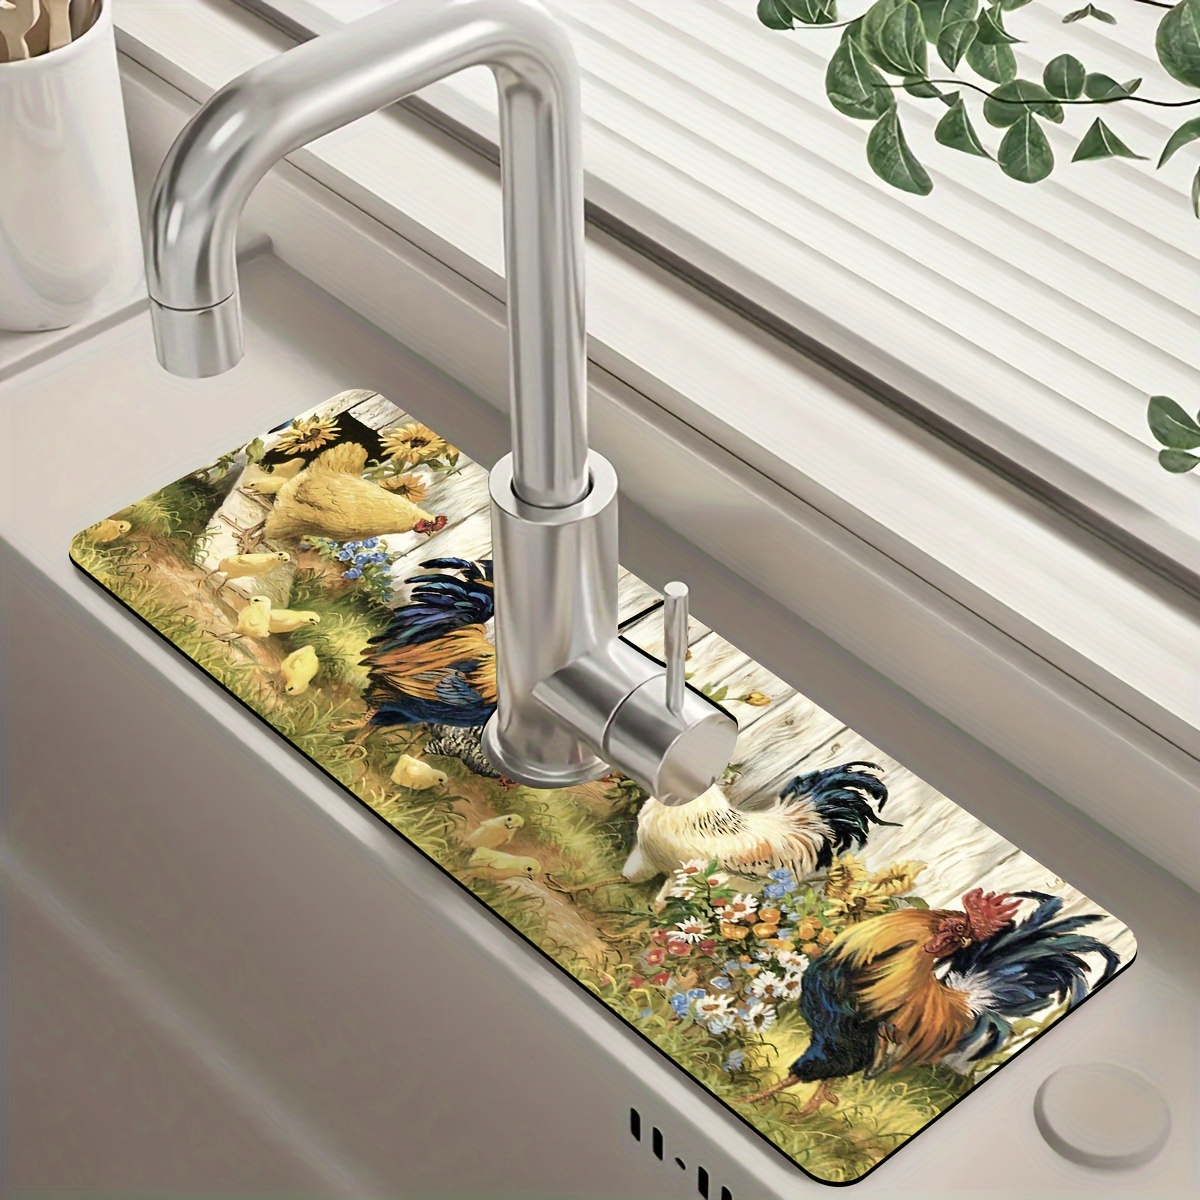 Sink Splash Faucet Guard Mat Kitchen Silicone Pad Drain Guard